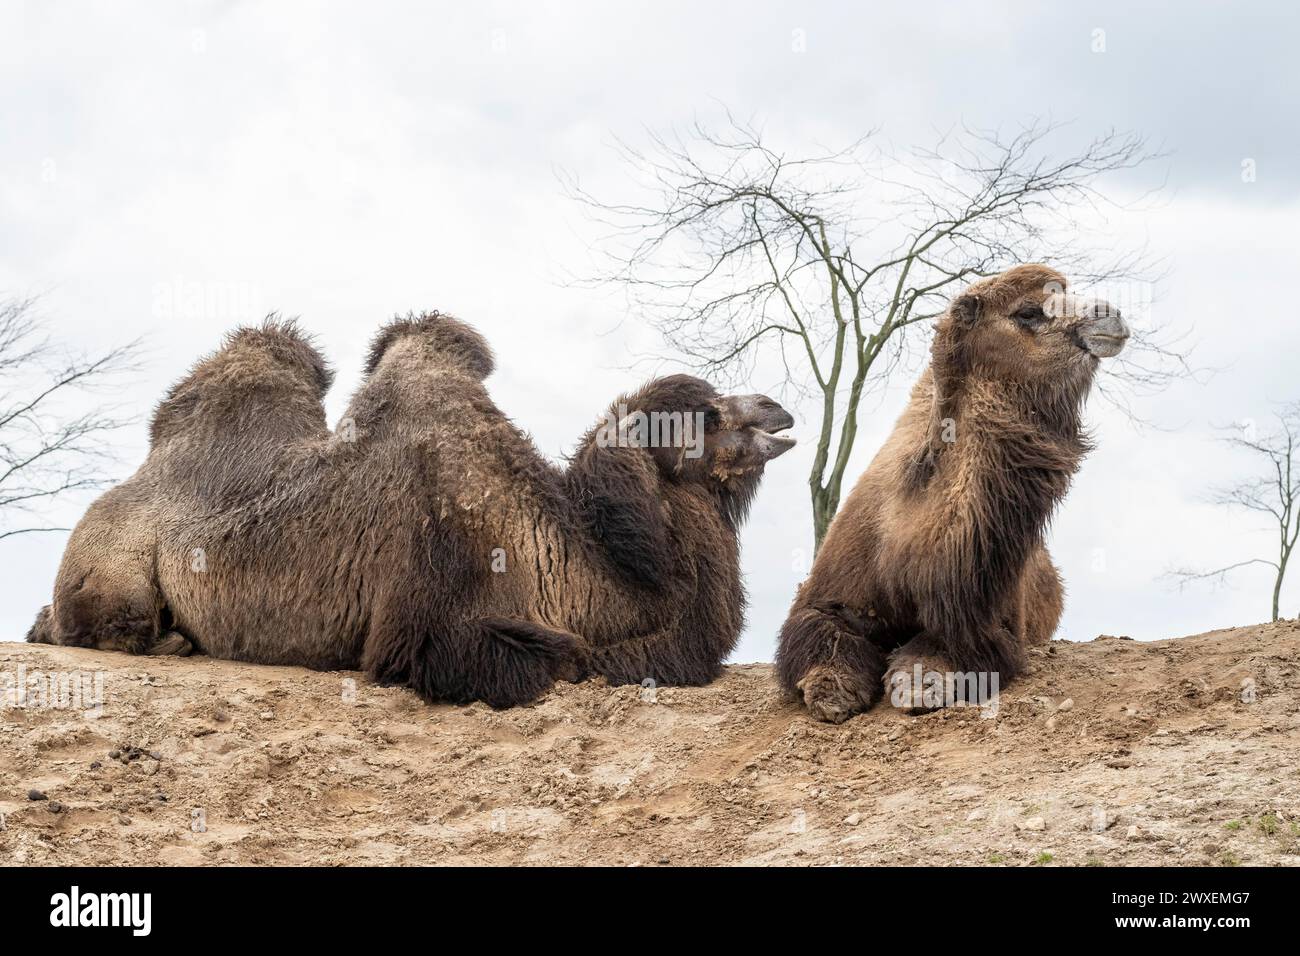 Bactrian camels (Camelus bactrianus), Emmen Zoo, Netherlands Stock Photo